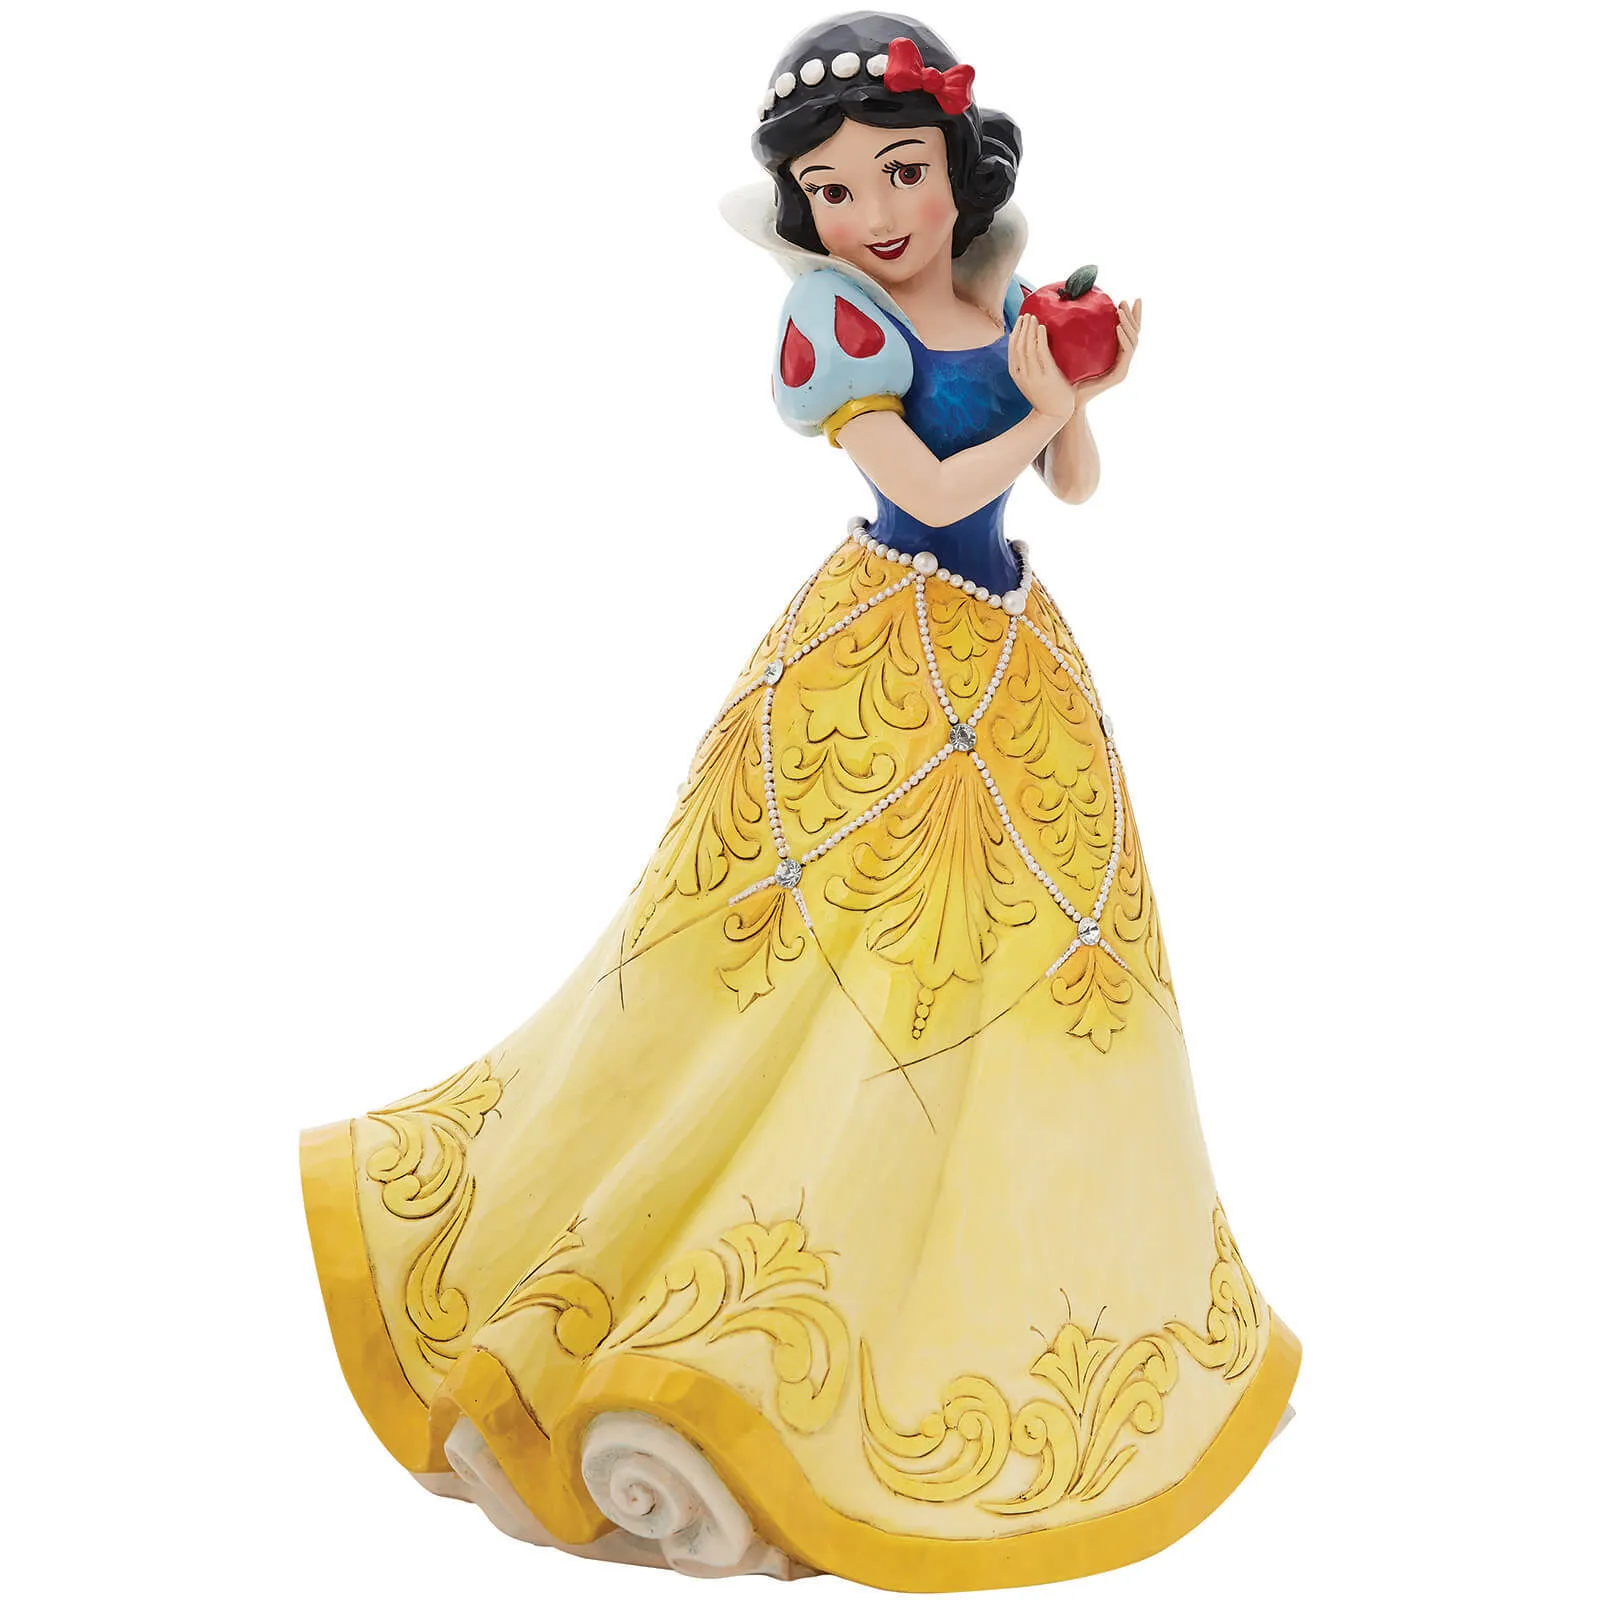  Snow White Deluxe Princess Figurine